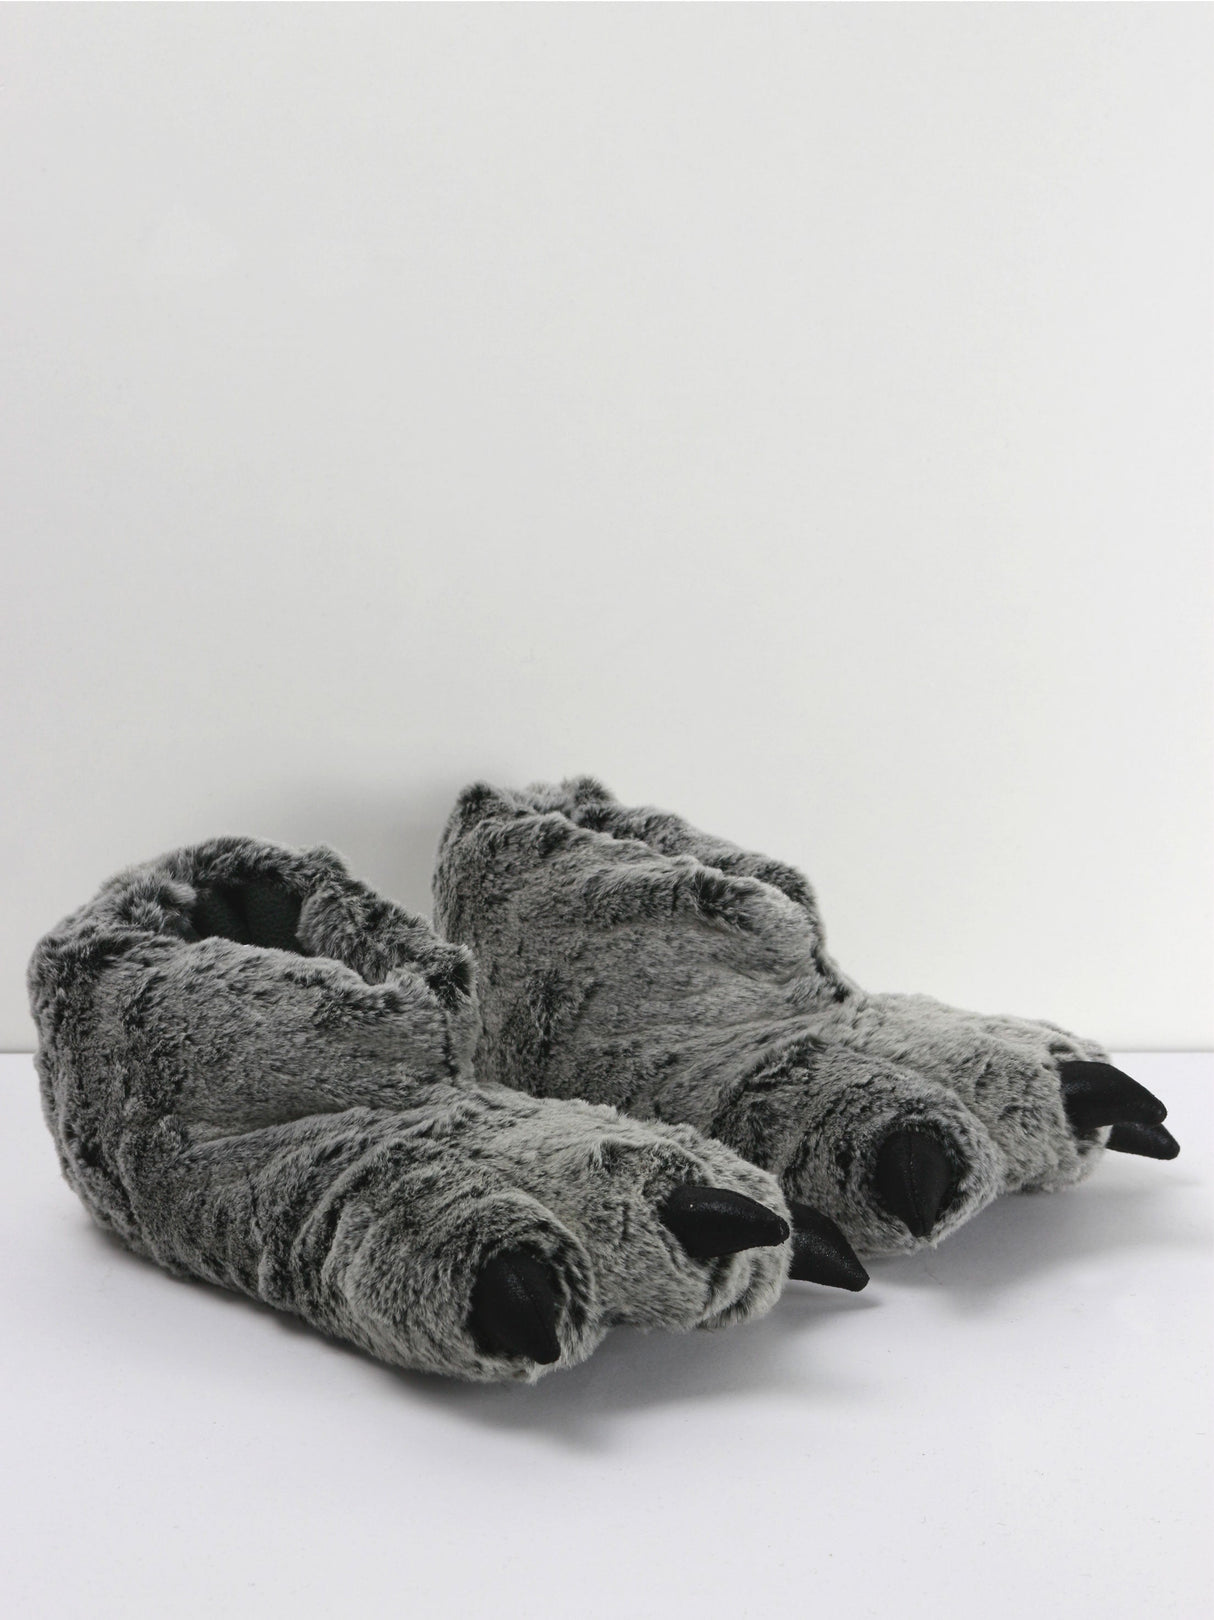 Image for Kids Boy Ferdinand Dinosaur Claw Slippers,Grey